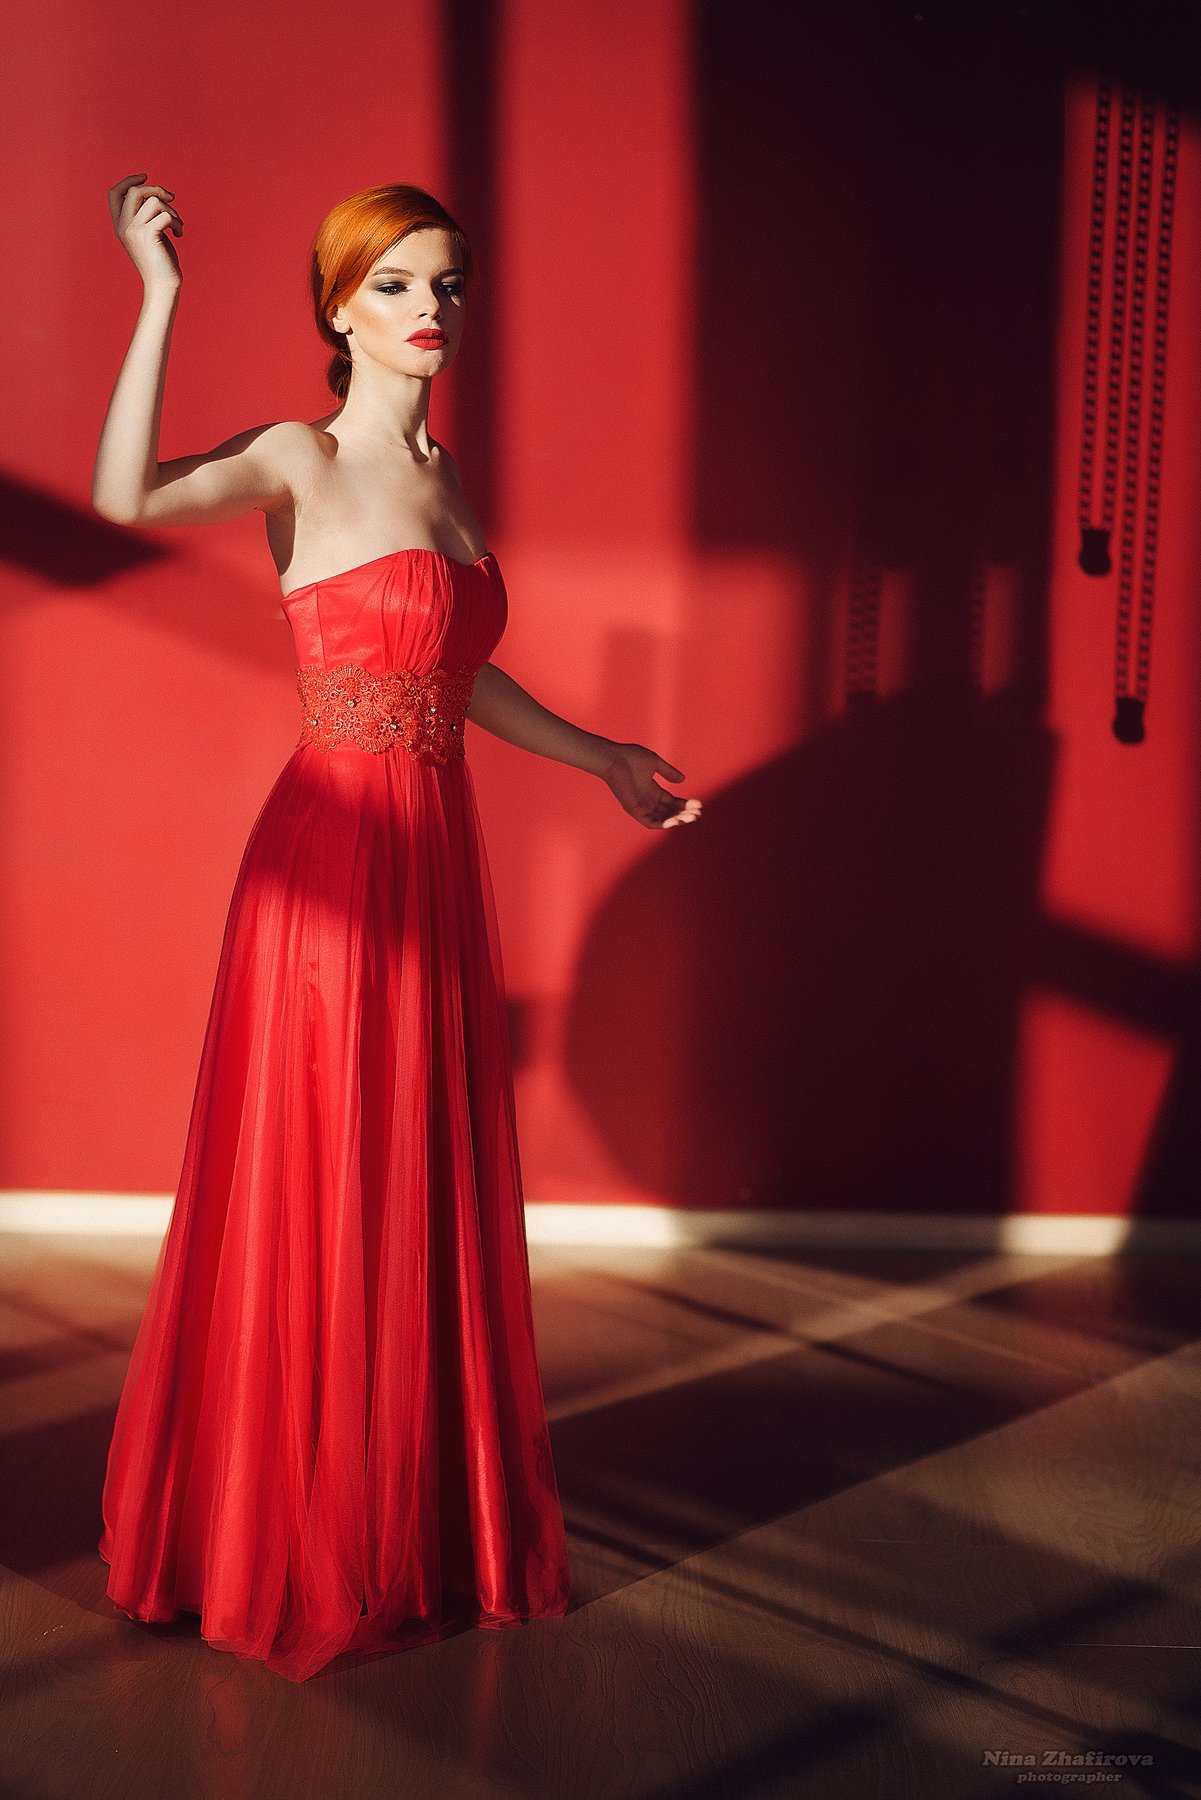 #woman #red #portrait, Нина Жафирова